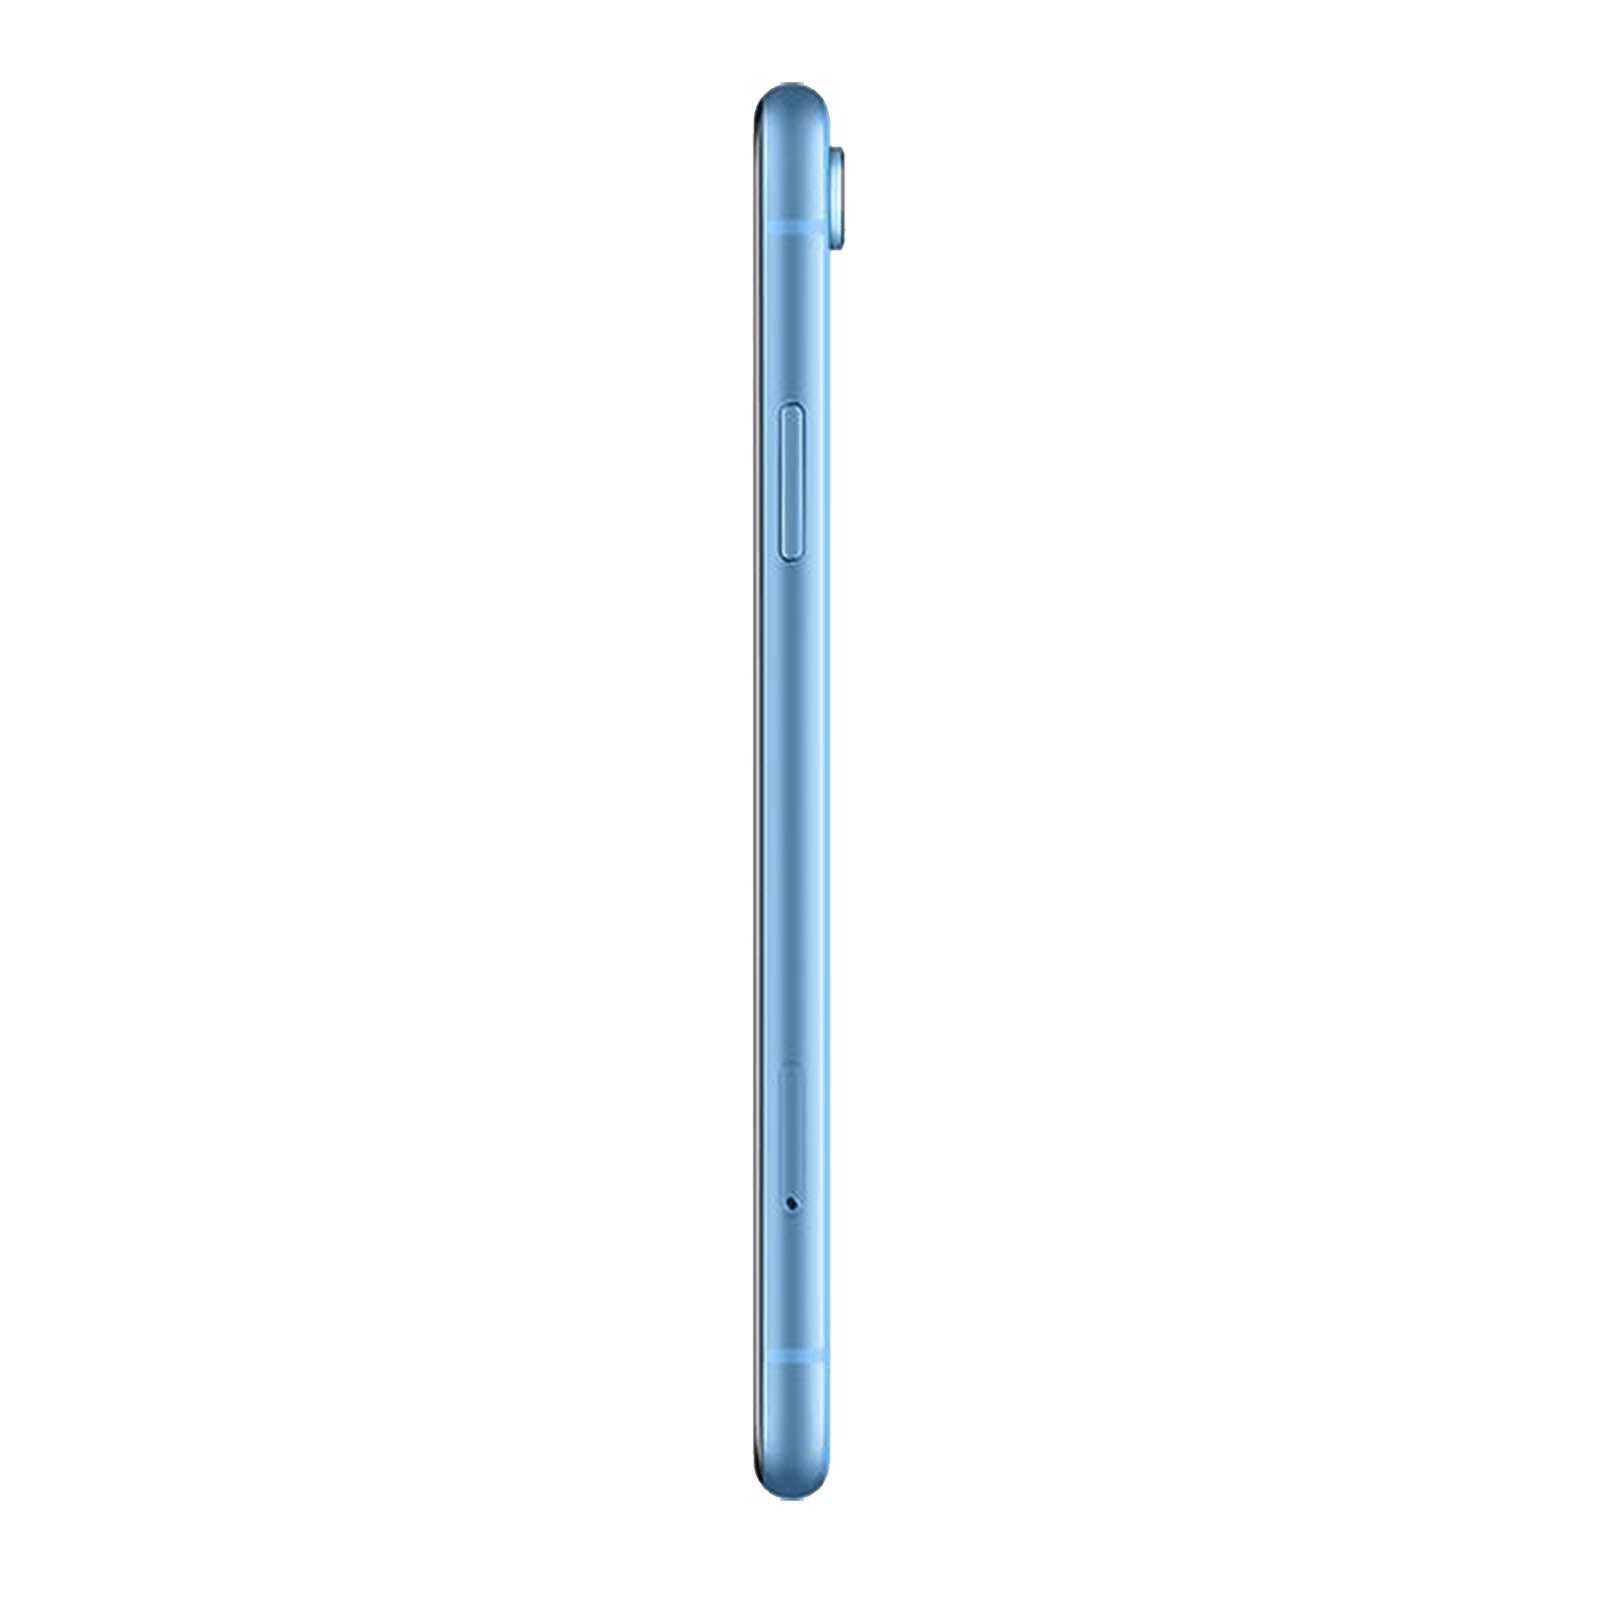 Apple iPhone XR 256GB Blue Pristine - Sprint